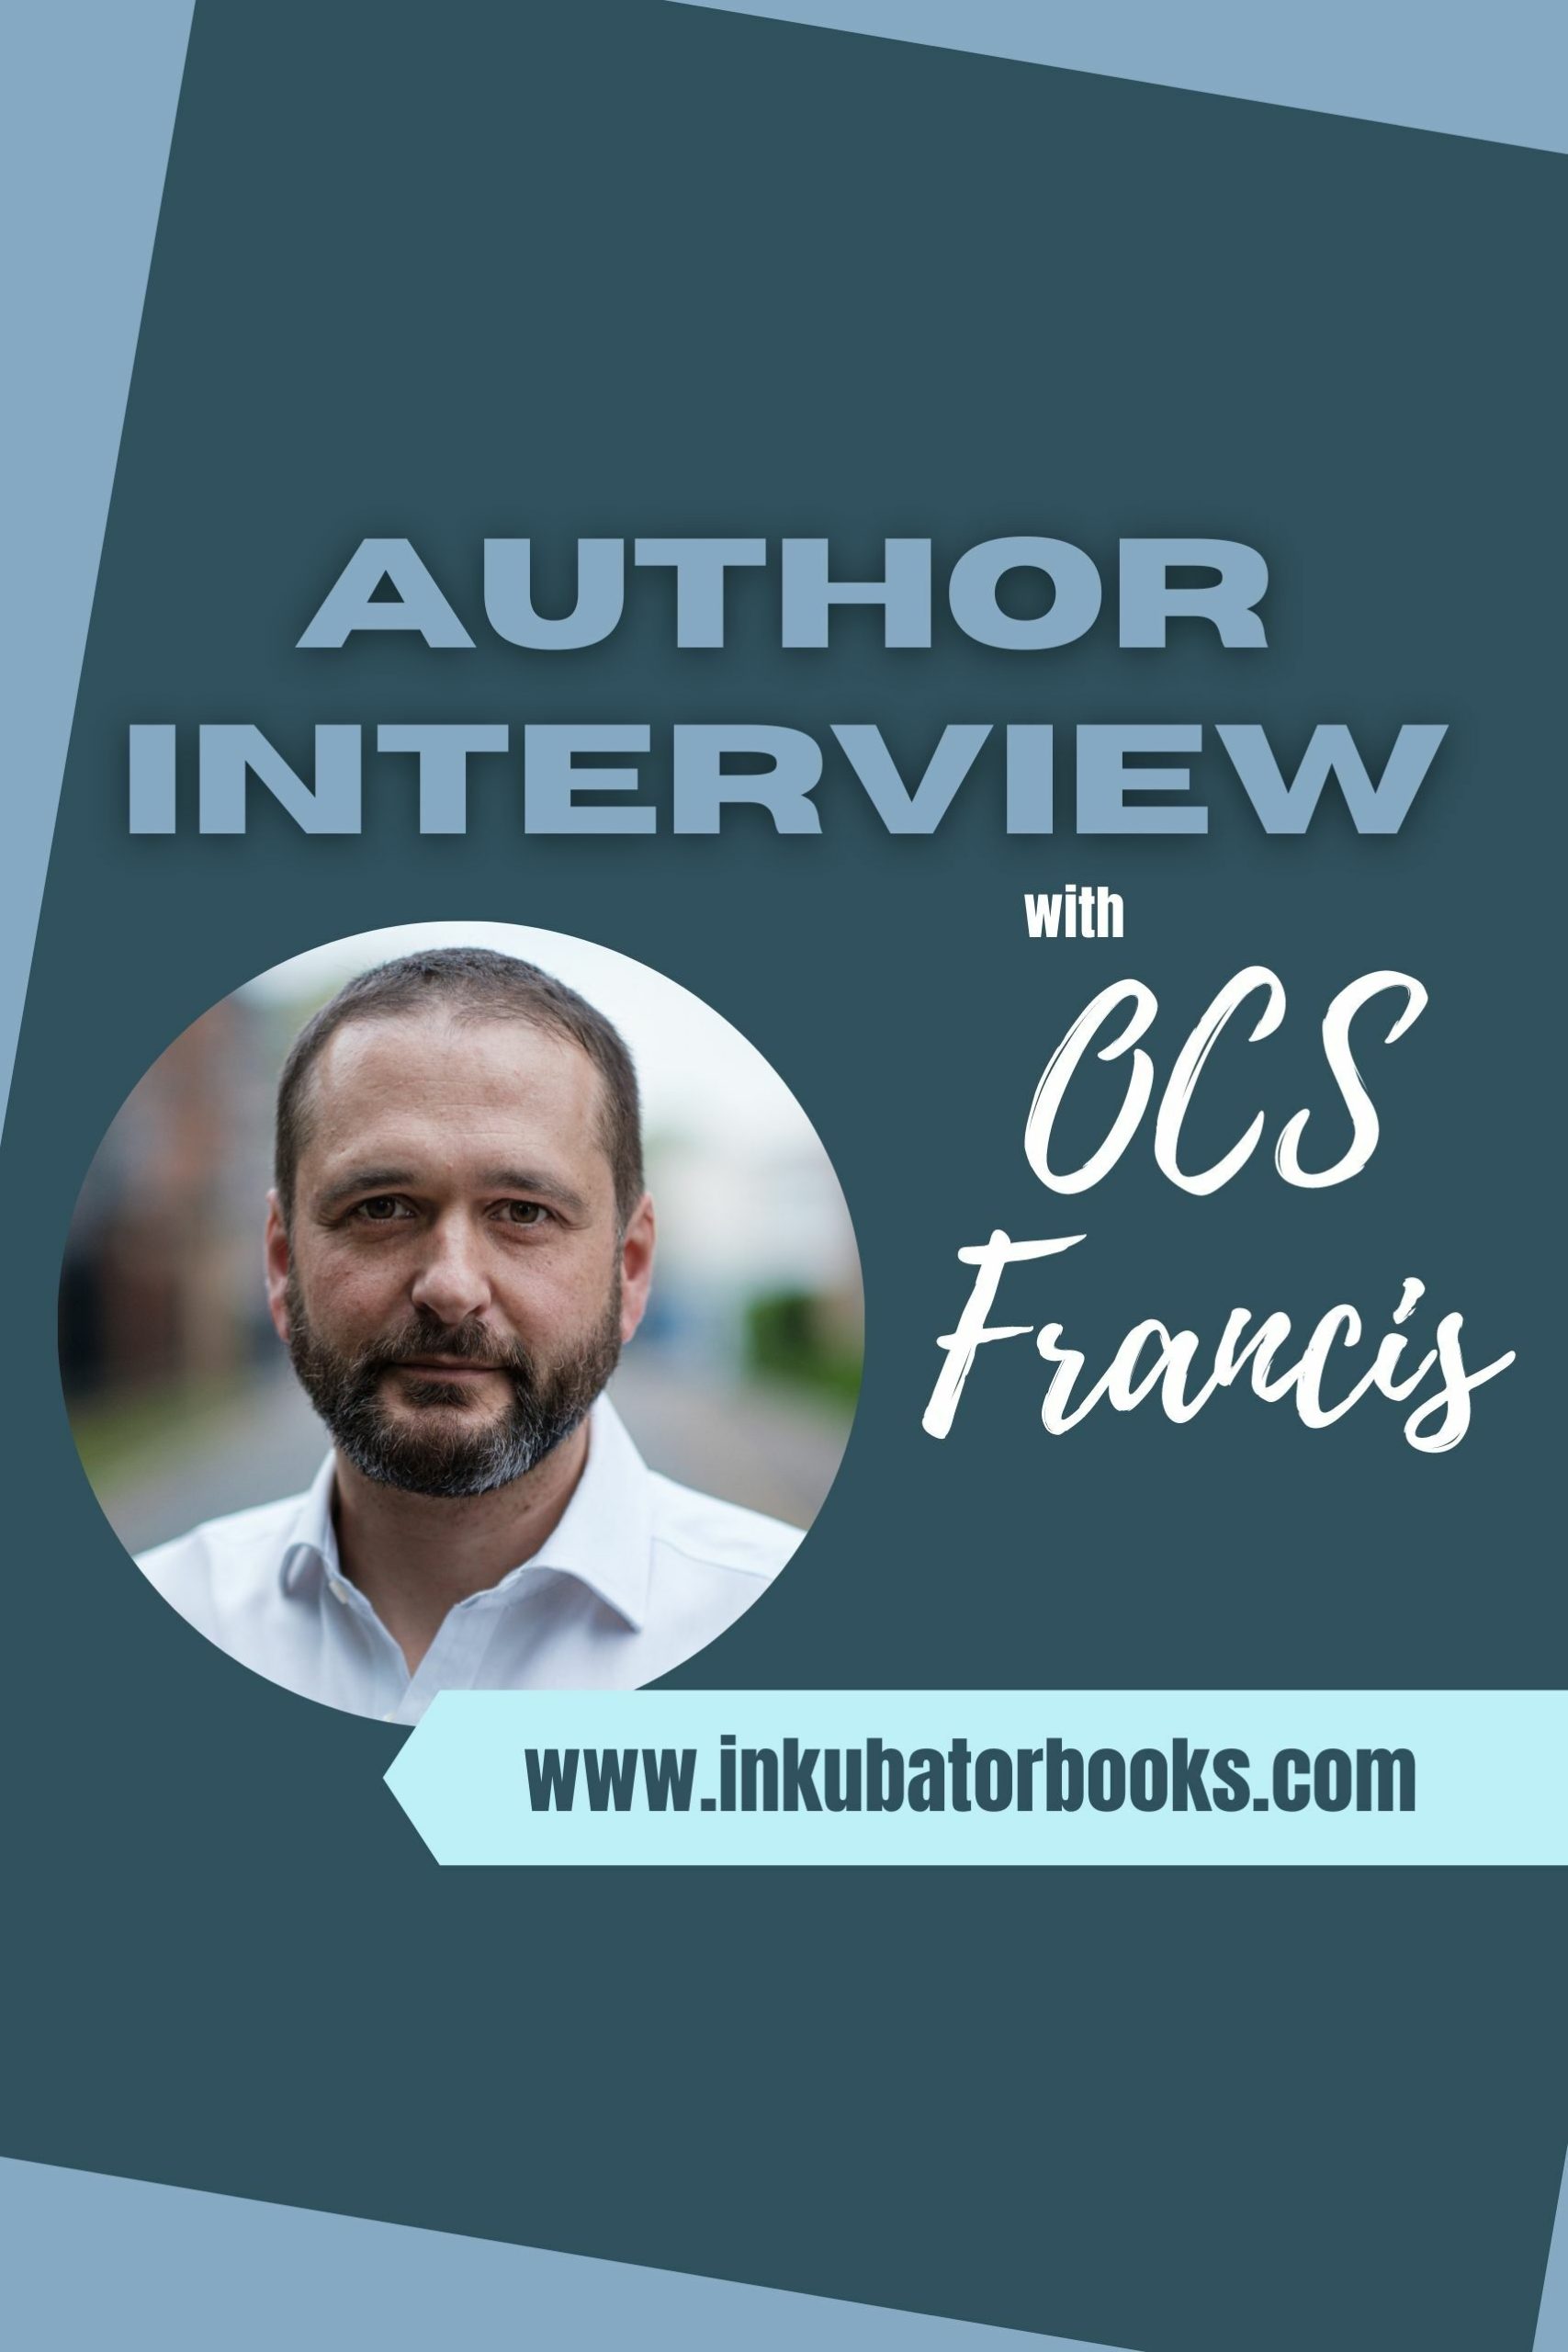 INKUBATOR AUTHOR INTERVIEW – OCS FRANCIS